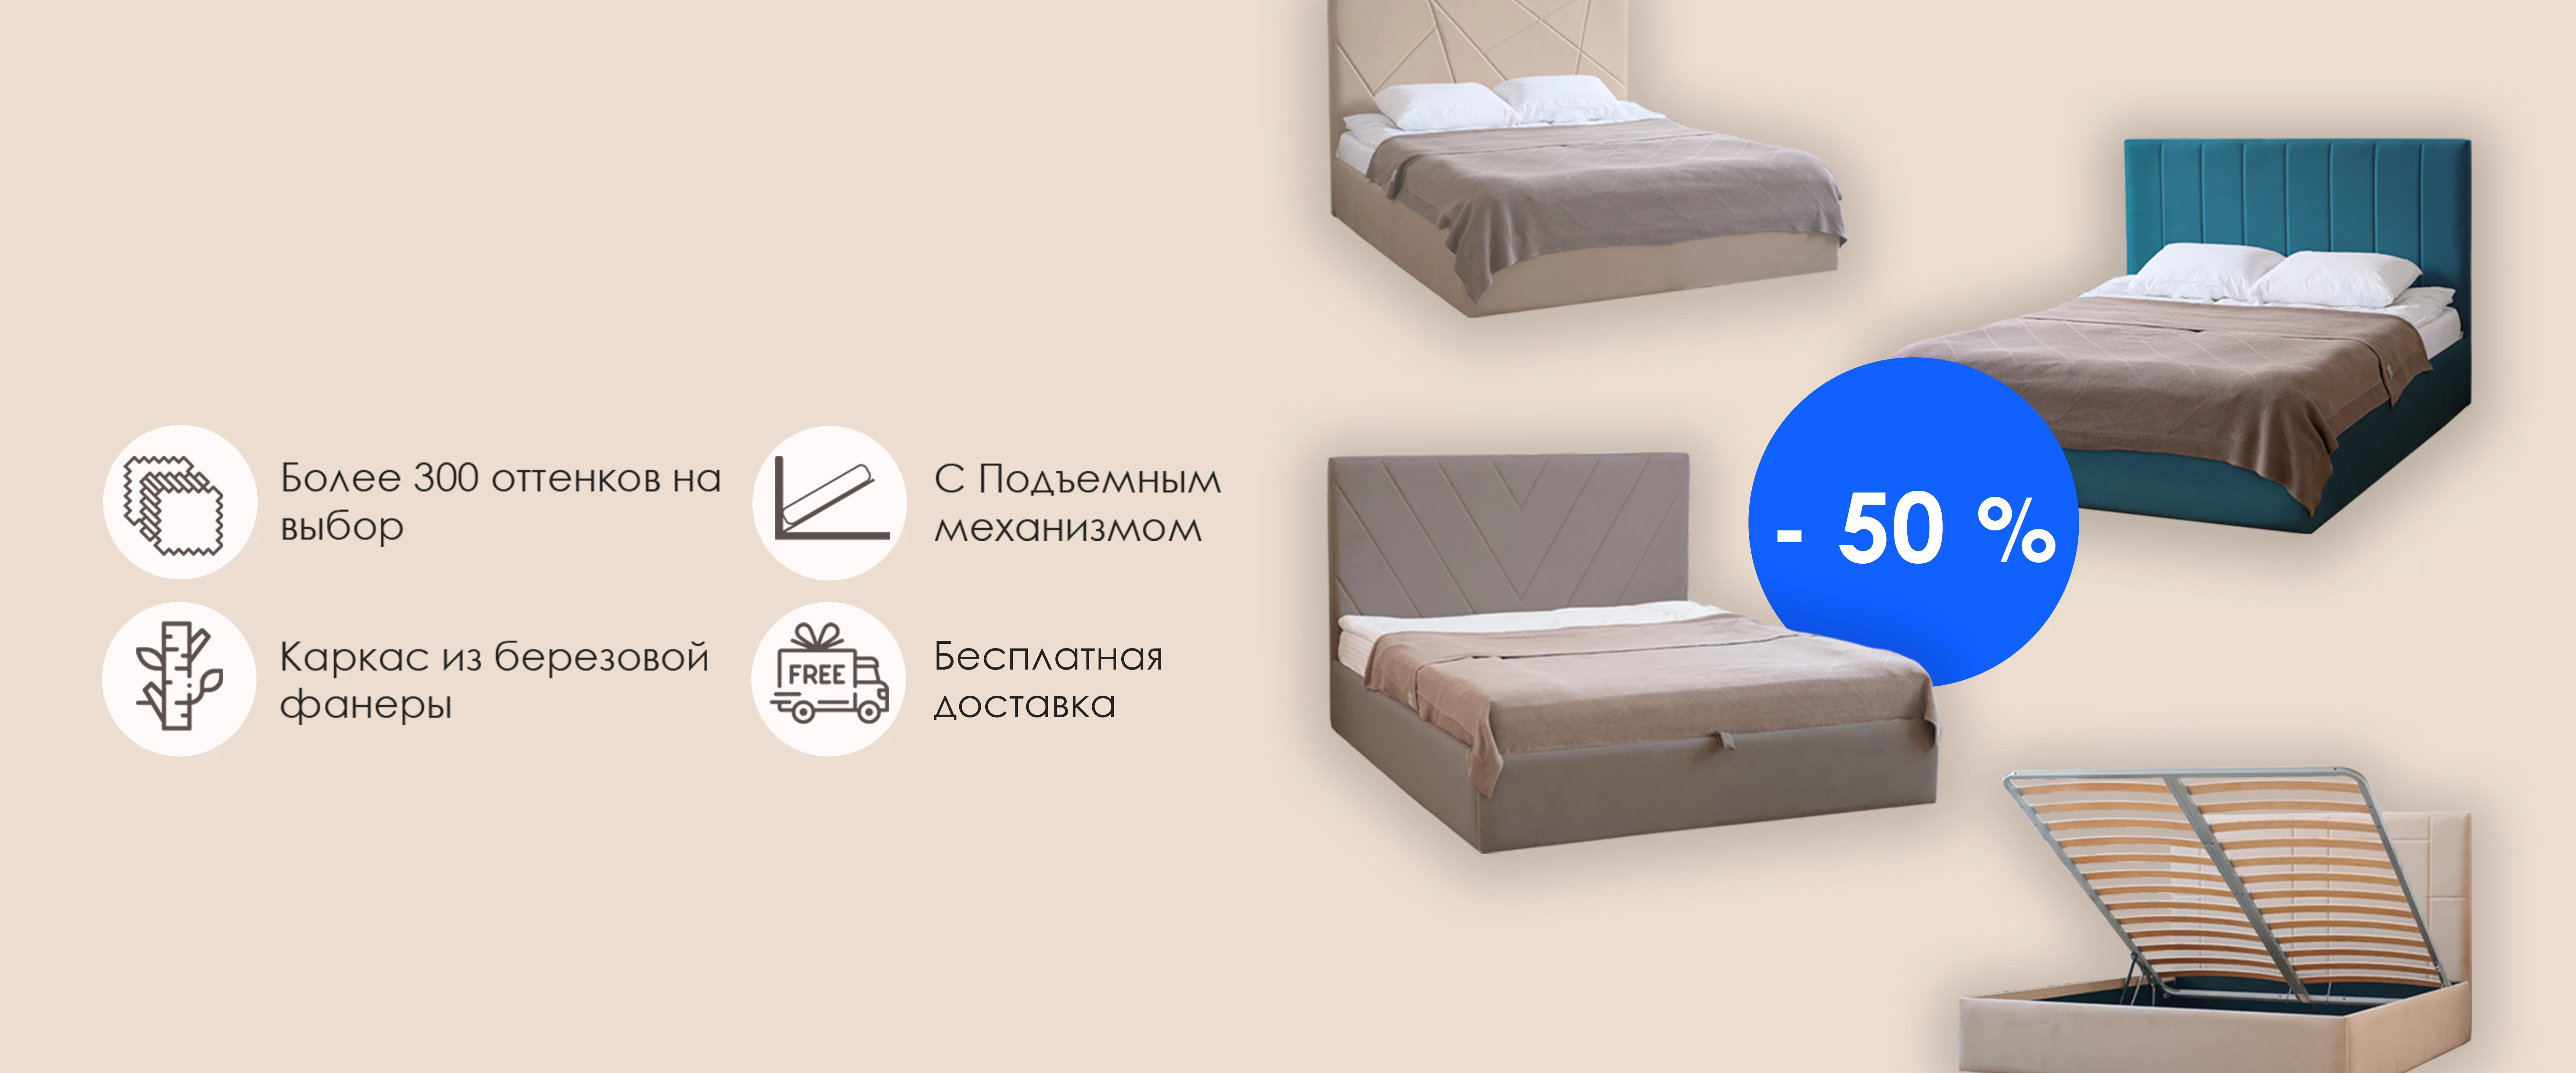 Скидка на кровати на Spatika.ru